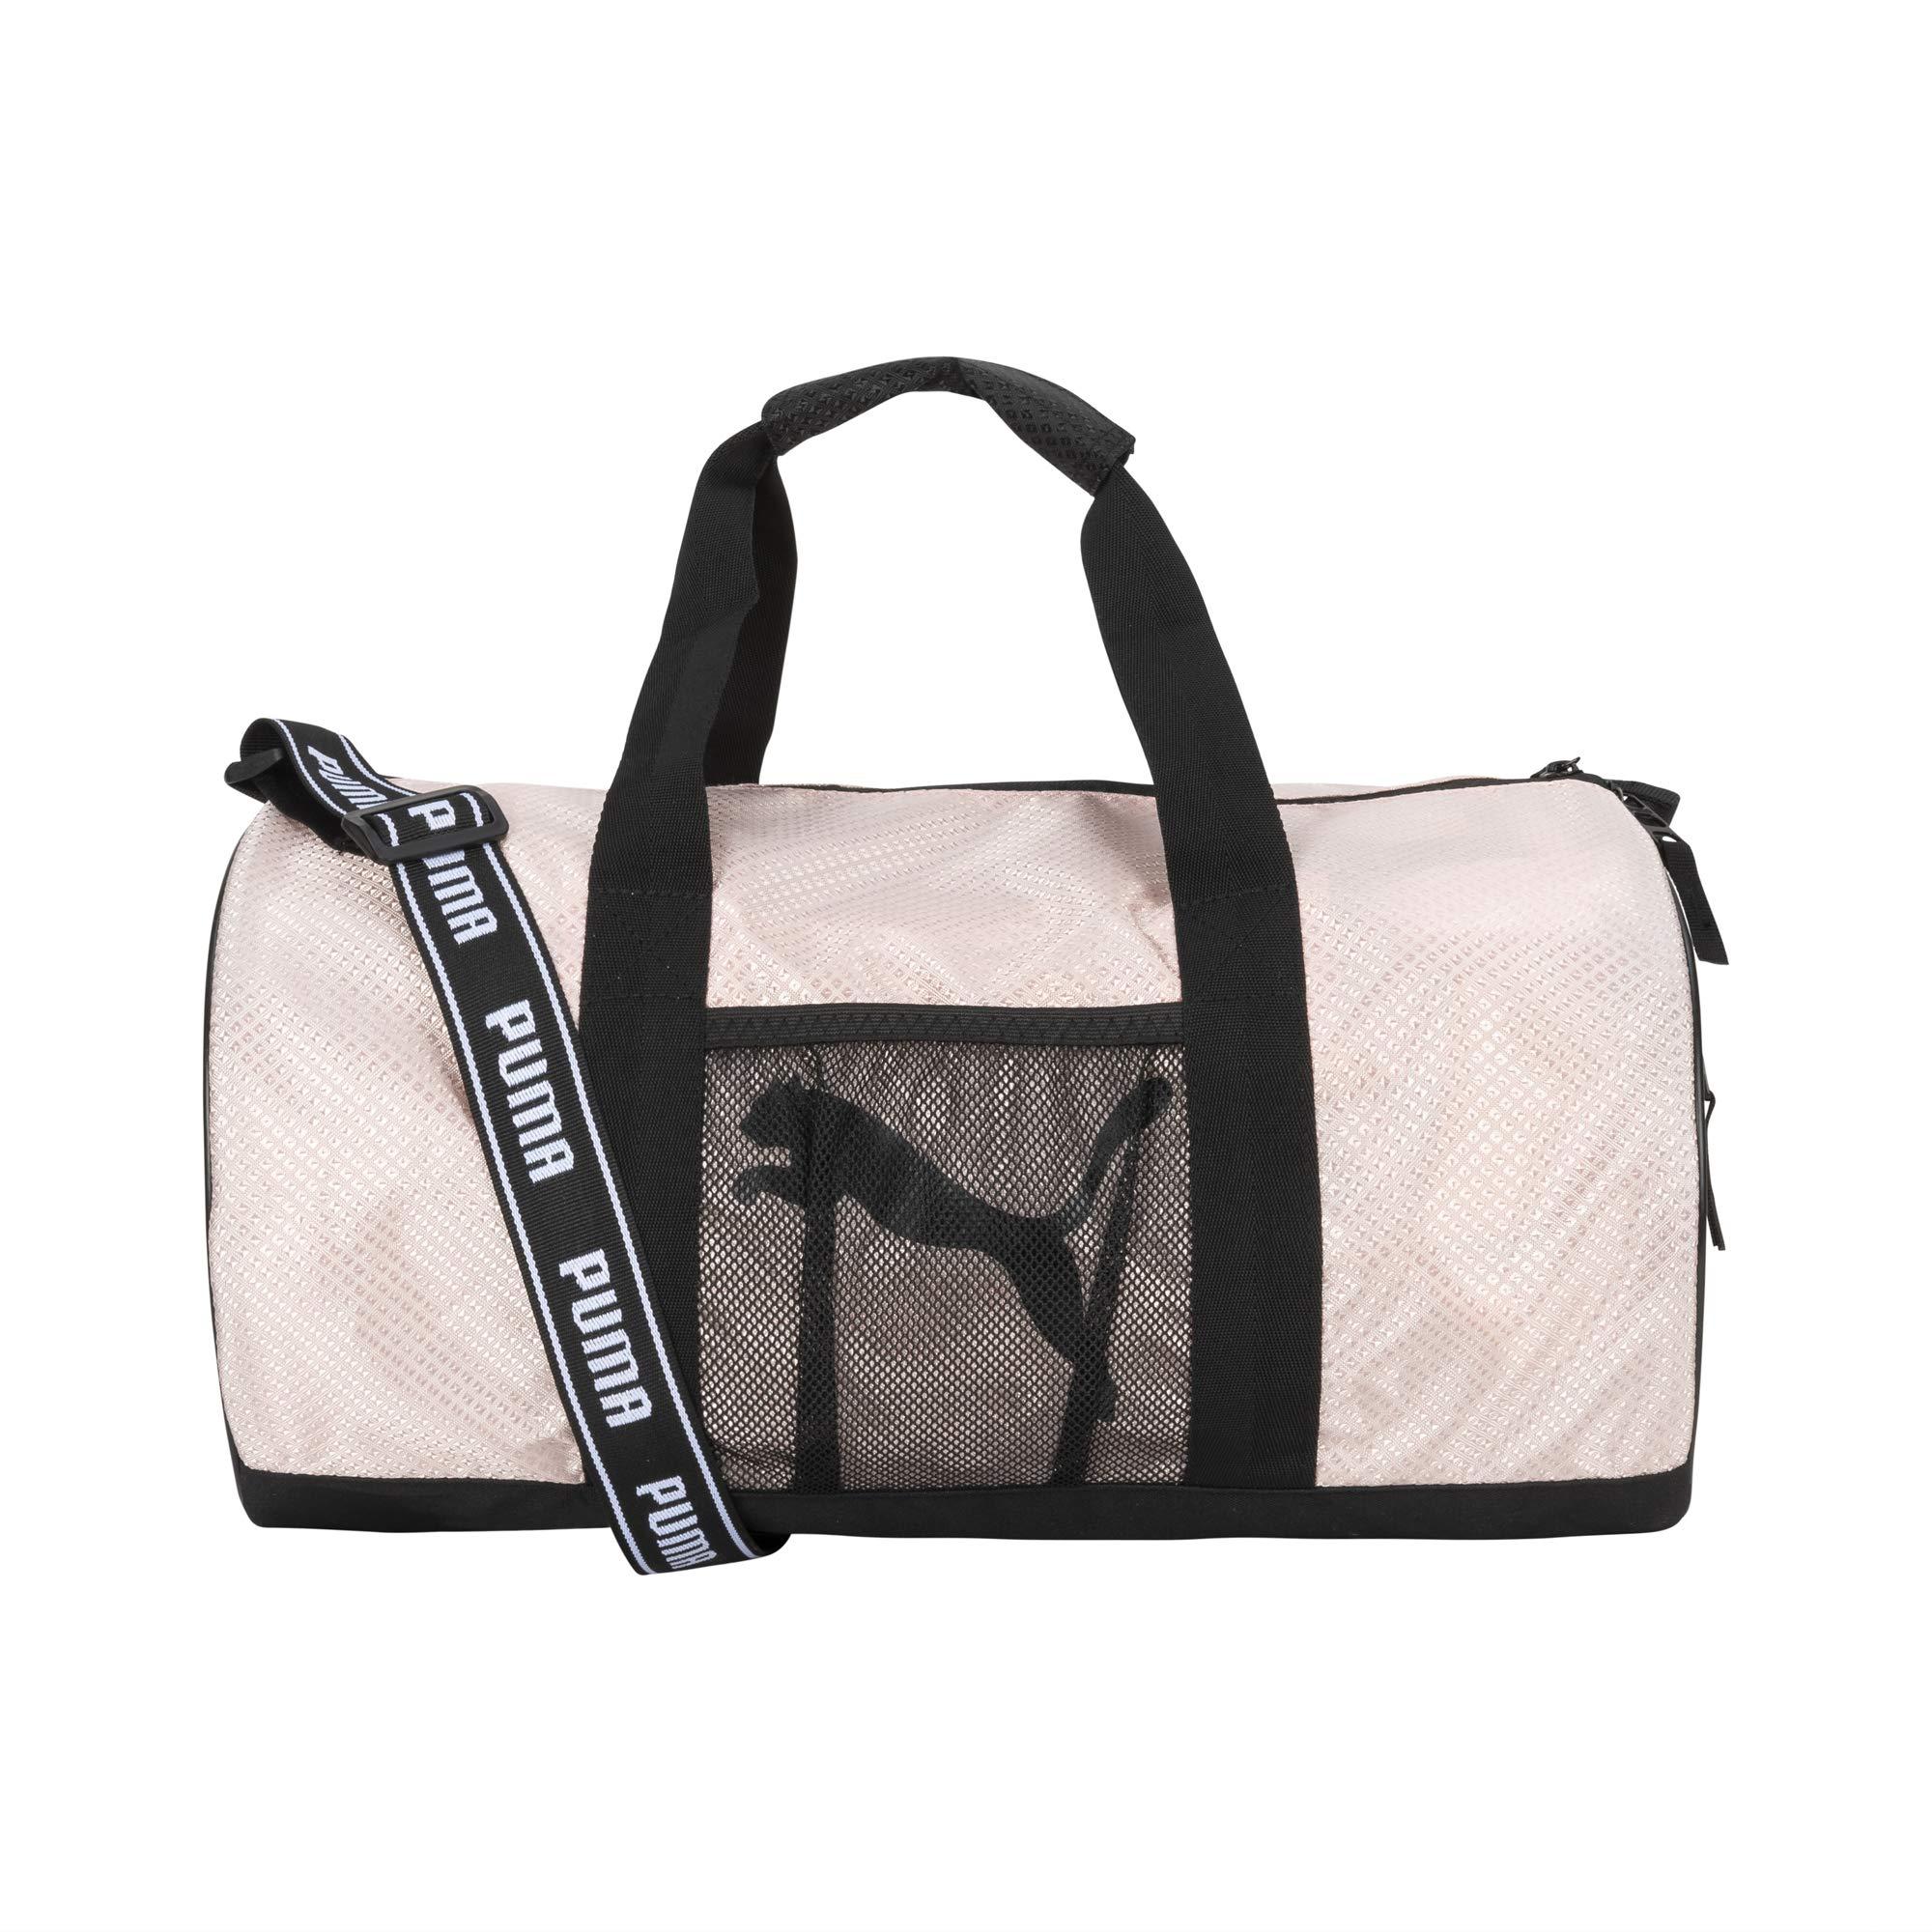 PUMA Jolt Duffel Bag in Pink/Black (Black) - Save 51% | Lyst